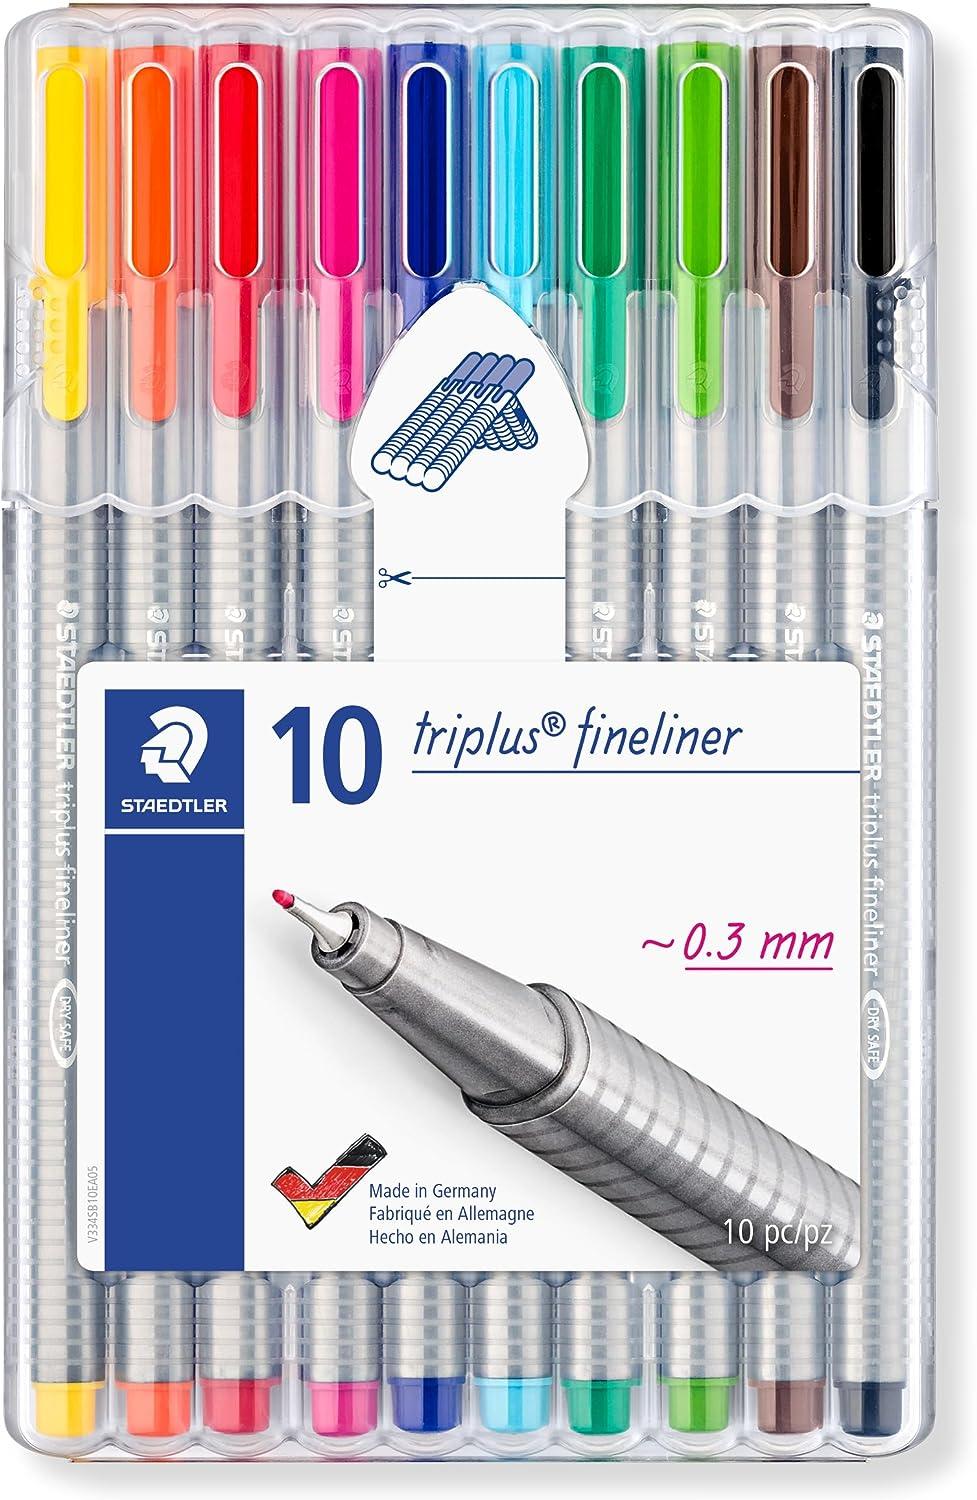 staedtler 334 sb10 triplus fineliner superfine pen 0.3mm line width - assorted colours desktop box of 10 